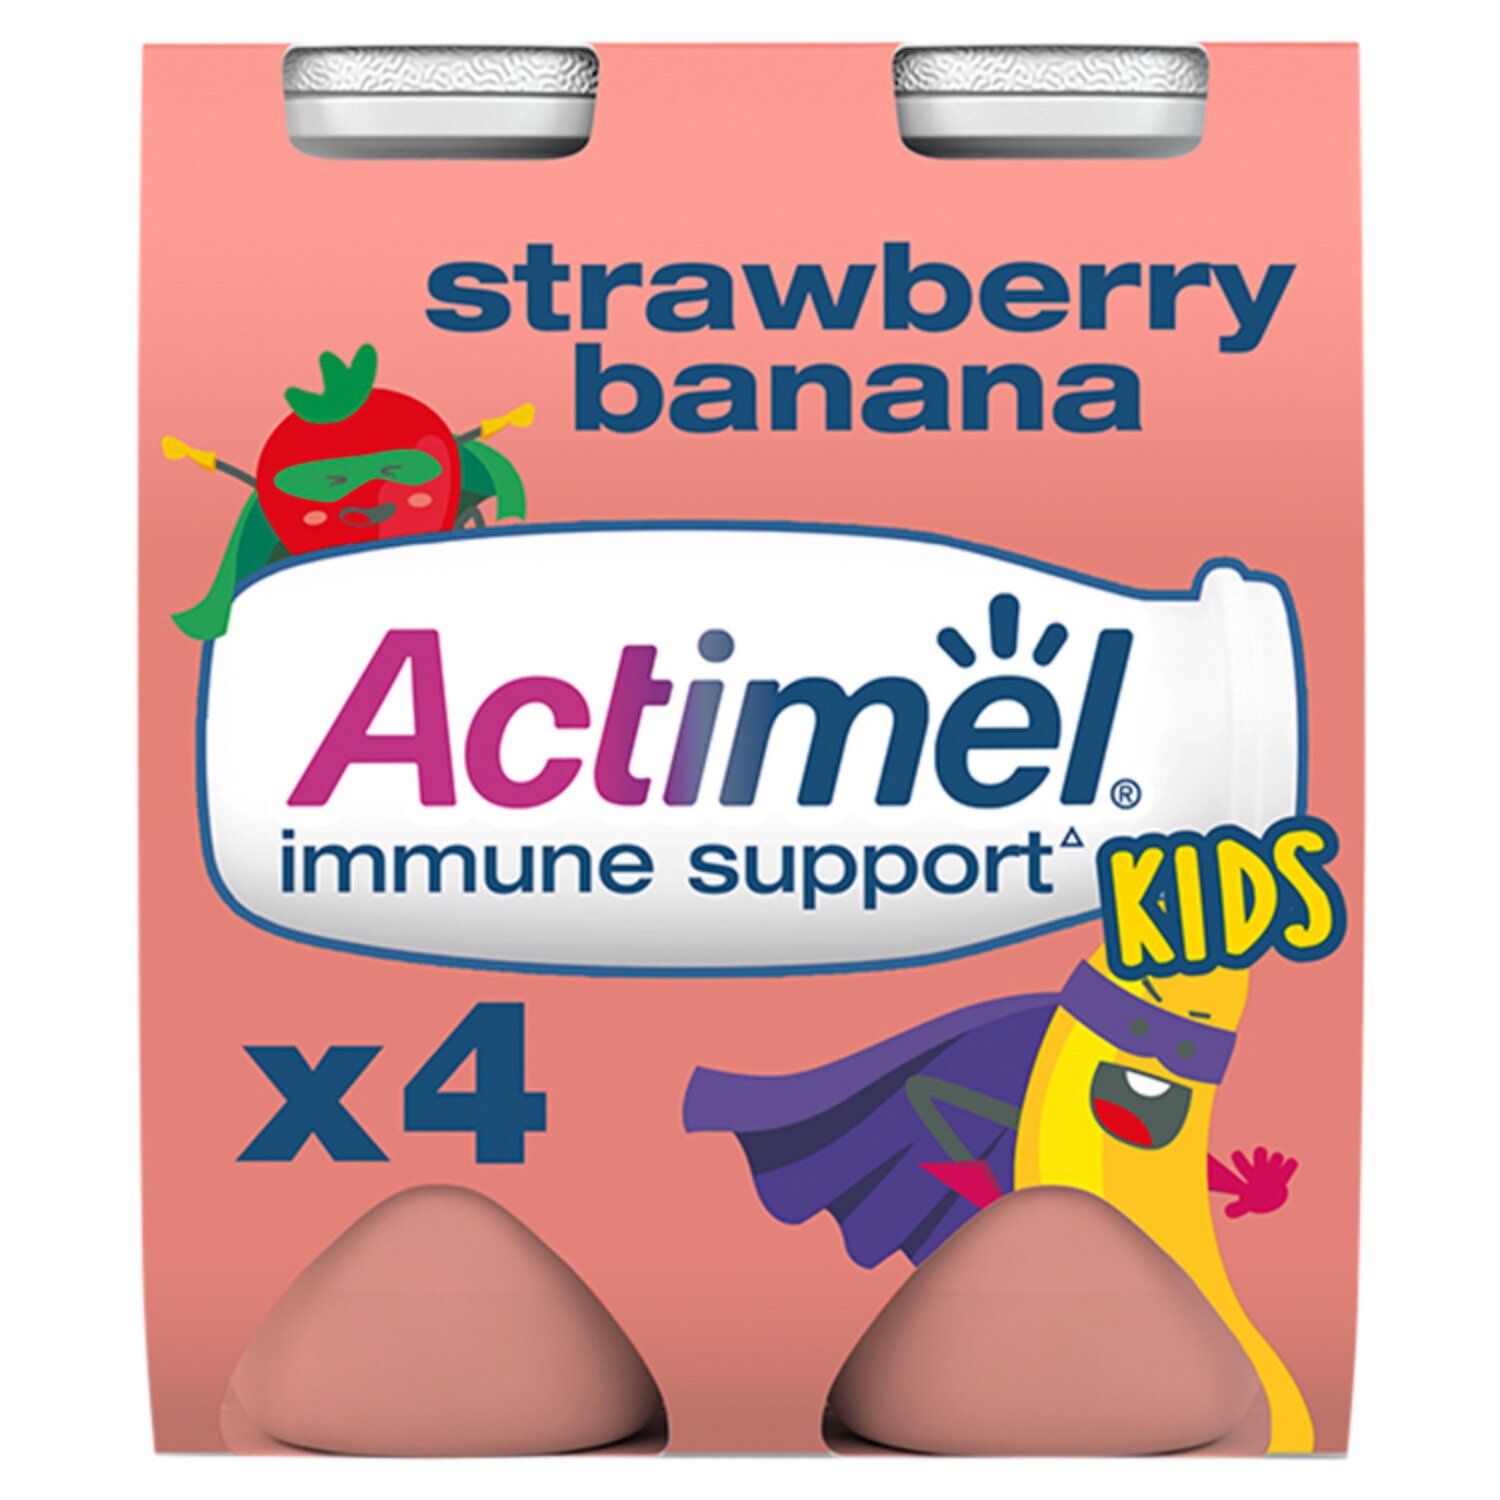 Danone Actimel Strawberry Yogurt Drink 4 Pack - Drinks